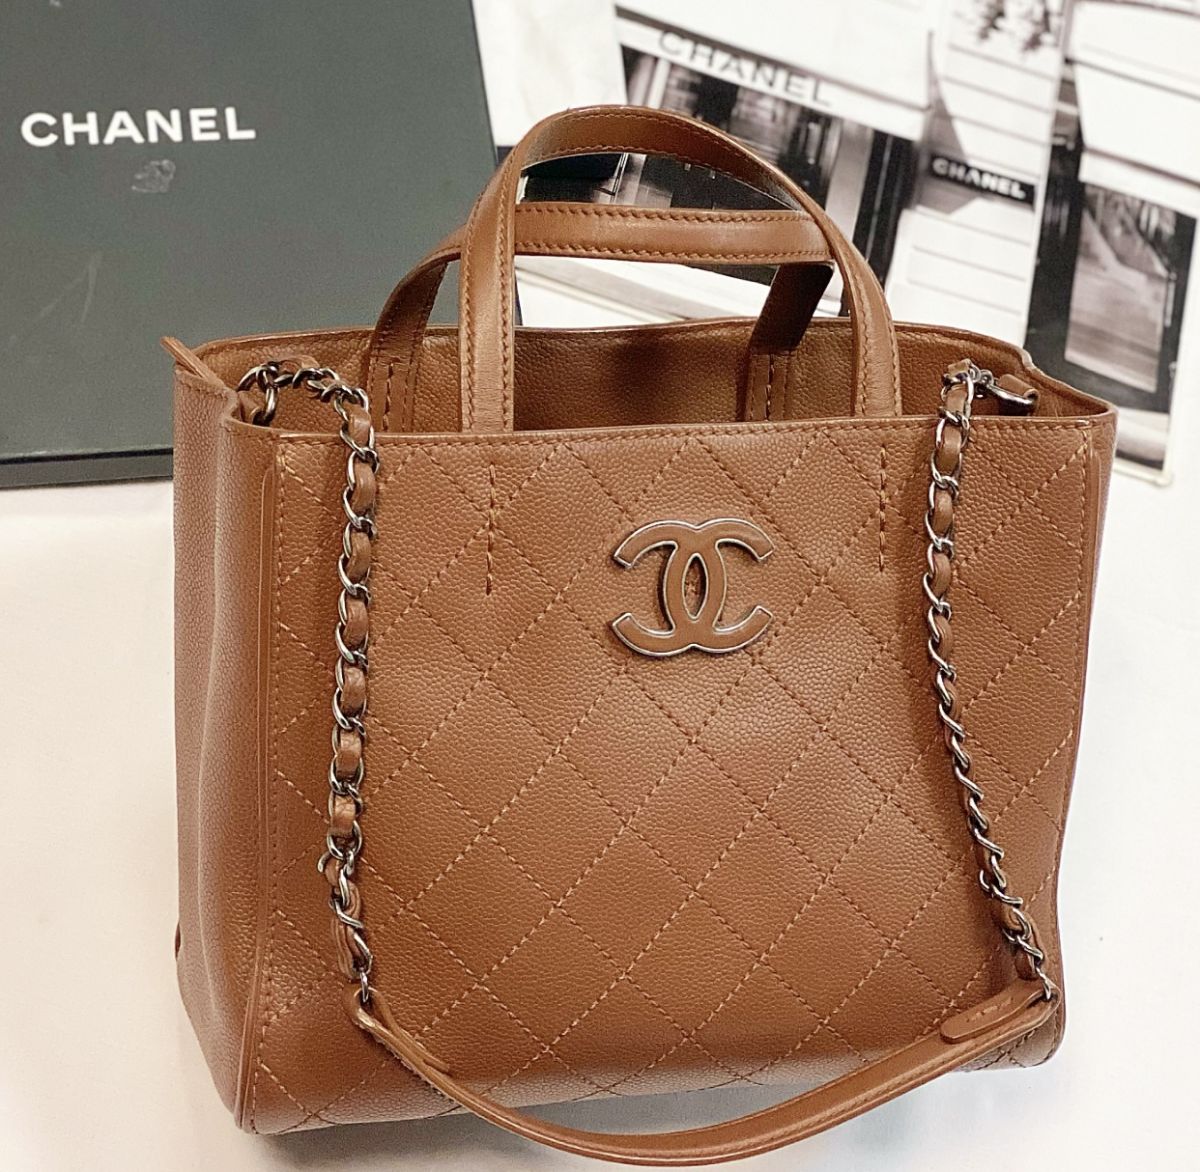 Сумка Chanel размер 28/23 цена 138 463 руб 